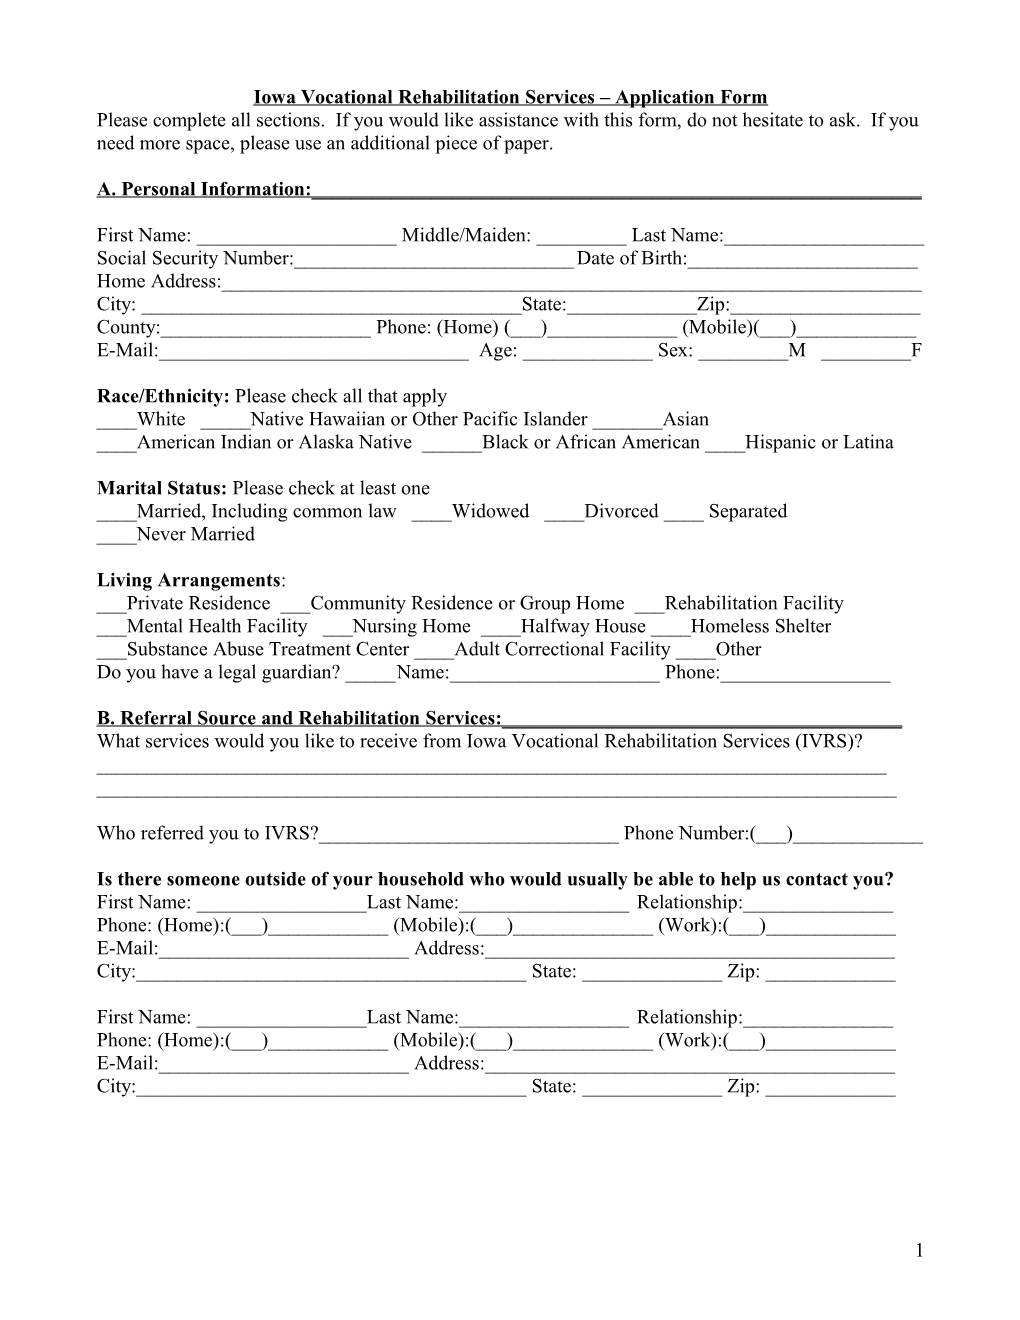 Iowa Vocational Rehabilitation Services Application Form